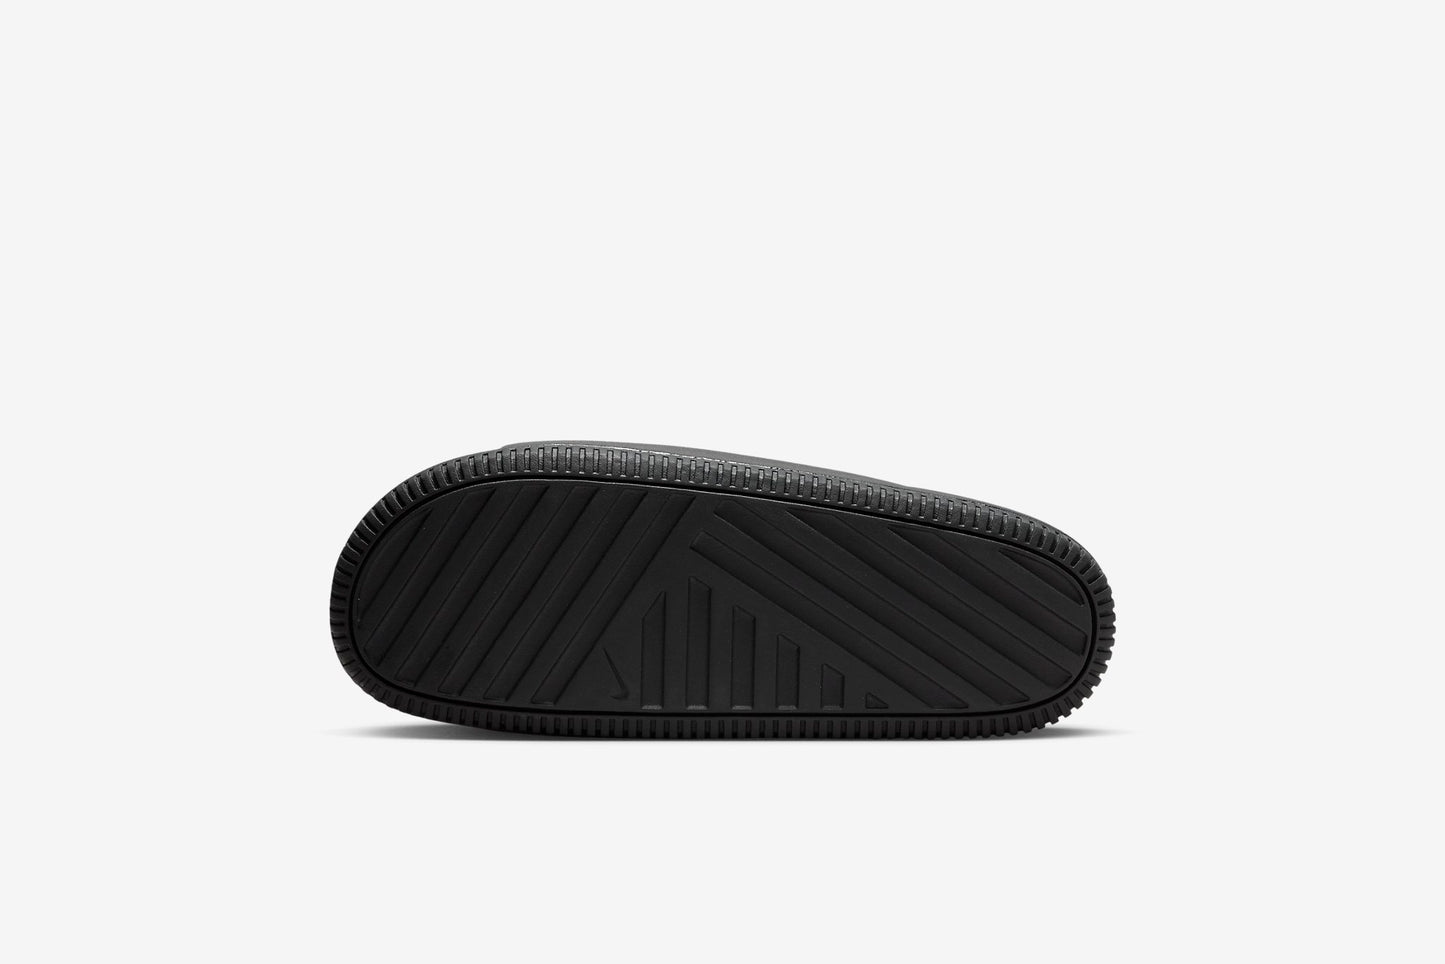 Nike "Calm Slide" M - Black / Black